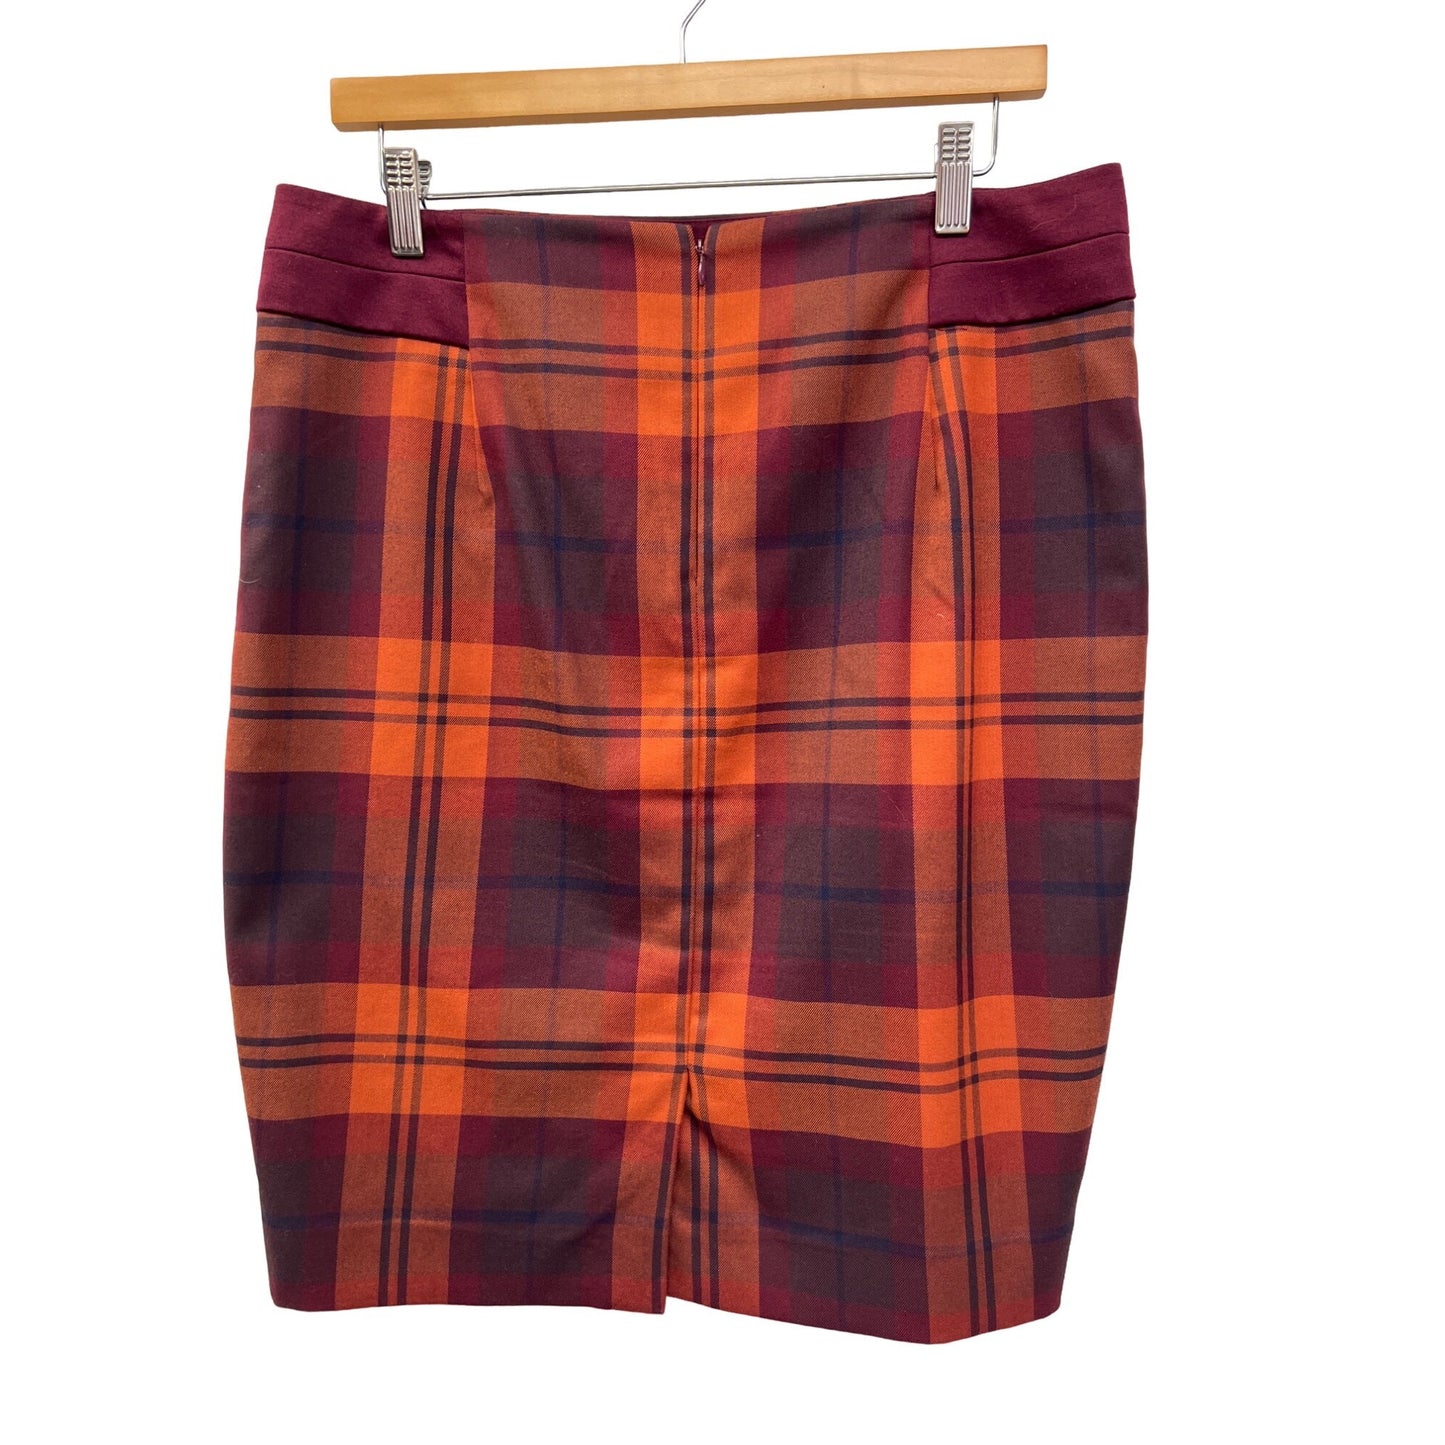 The Limited Burgandy Wine and Orange Plaid Pencil Skirt